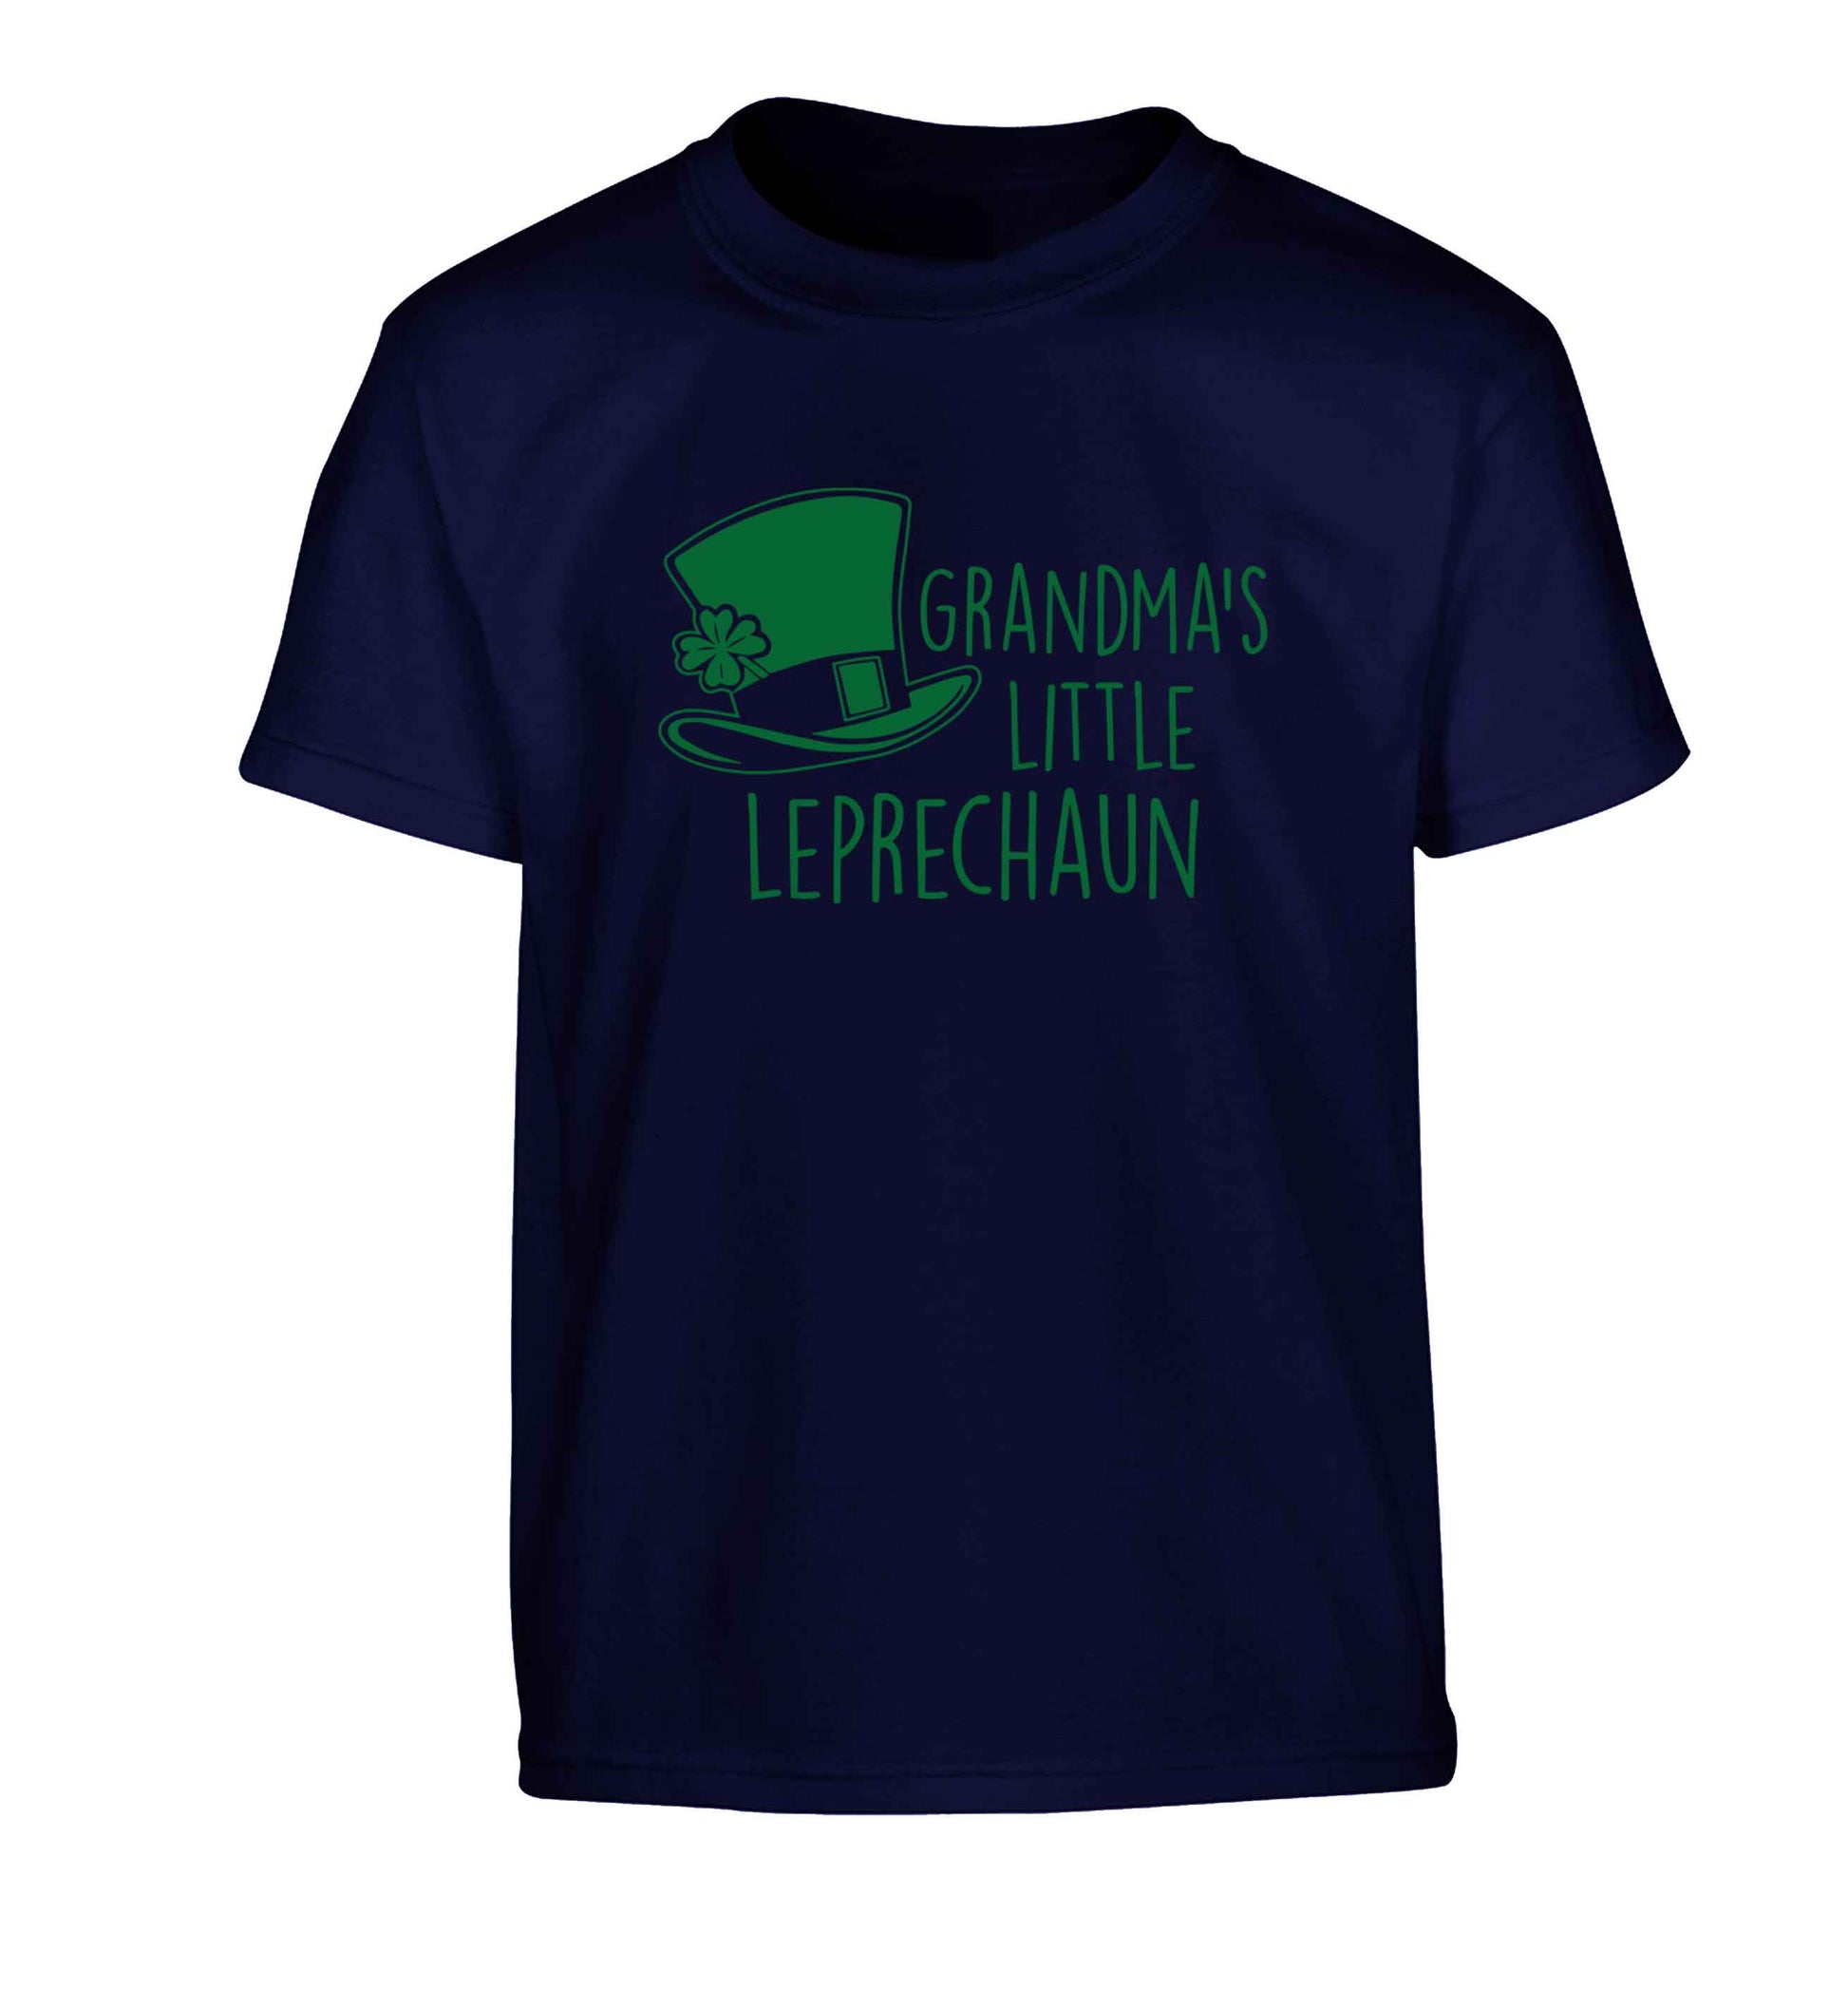 Grandma's little leprechaun Children's navy Tshirt 12-13 Years